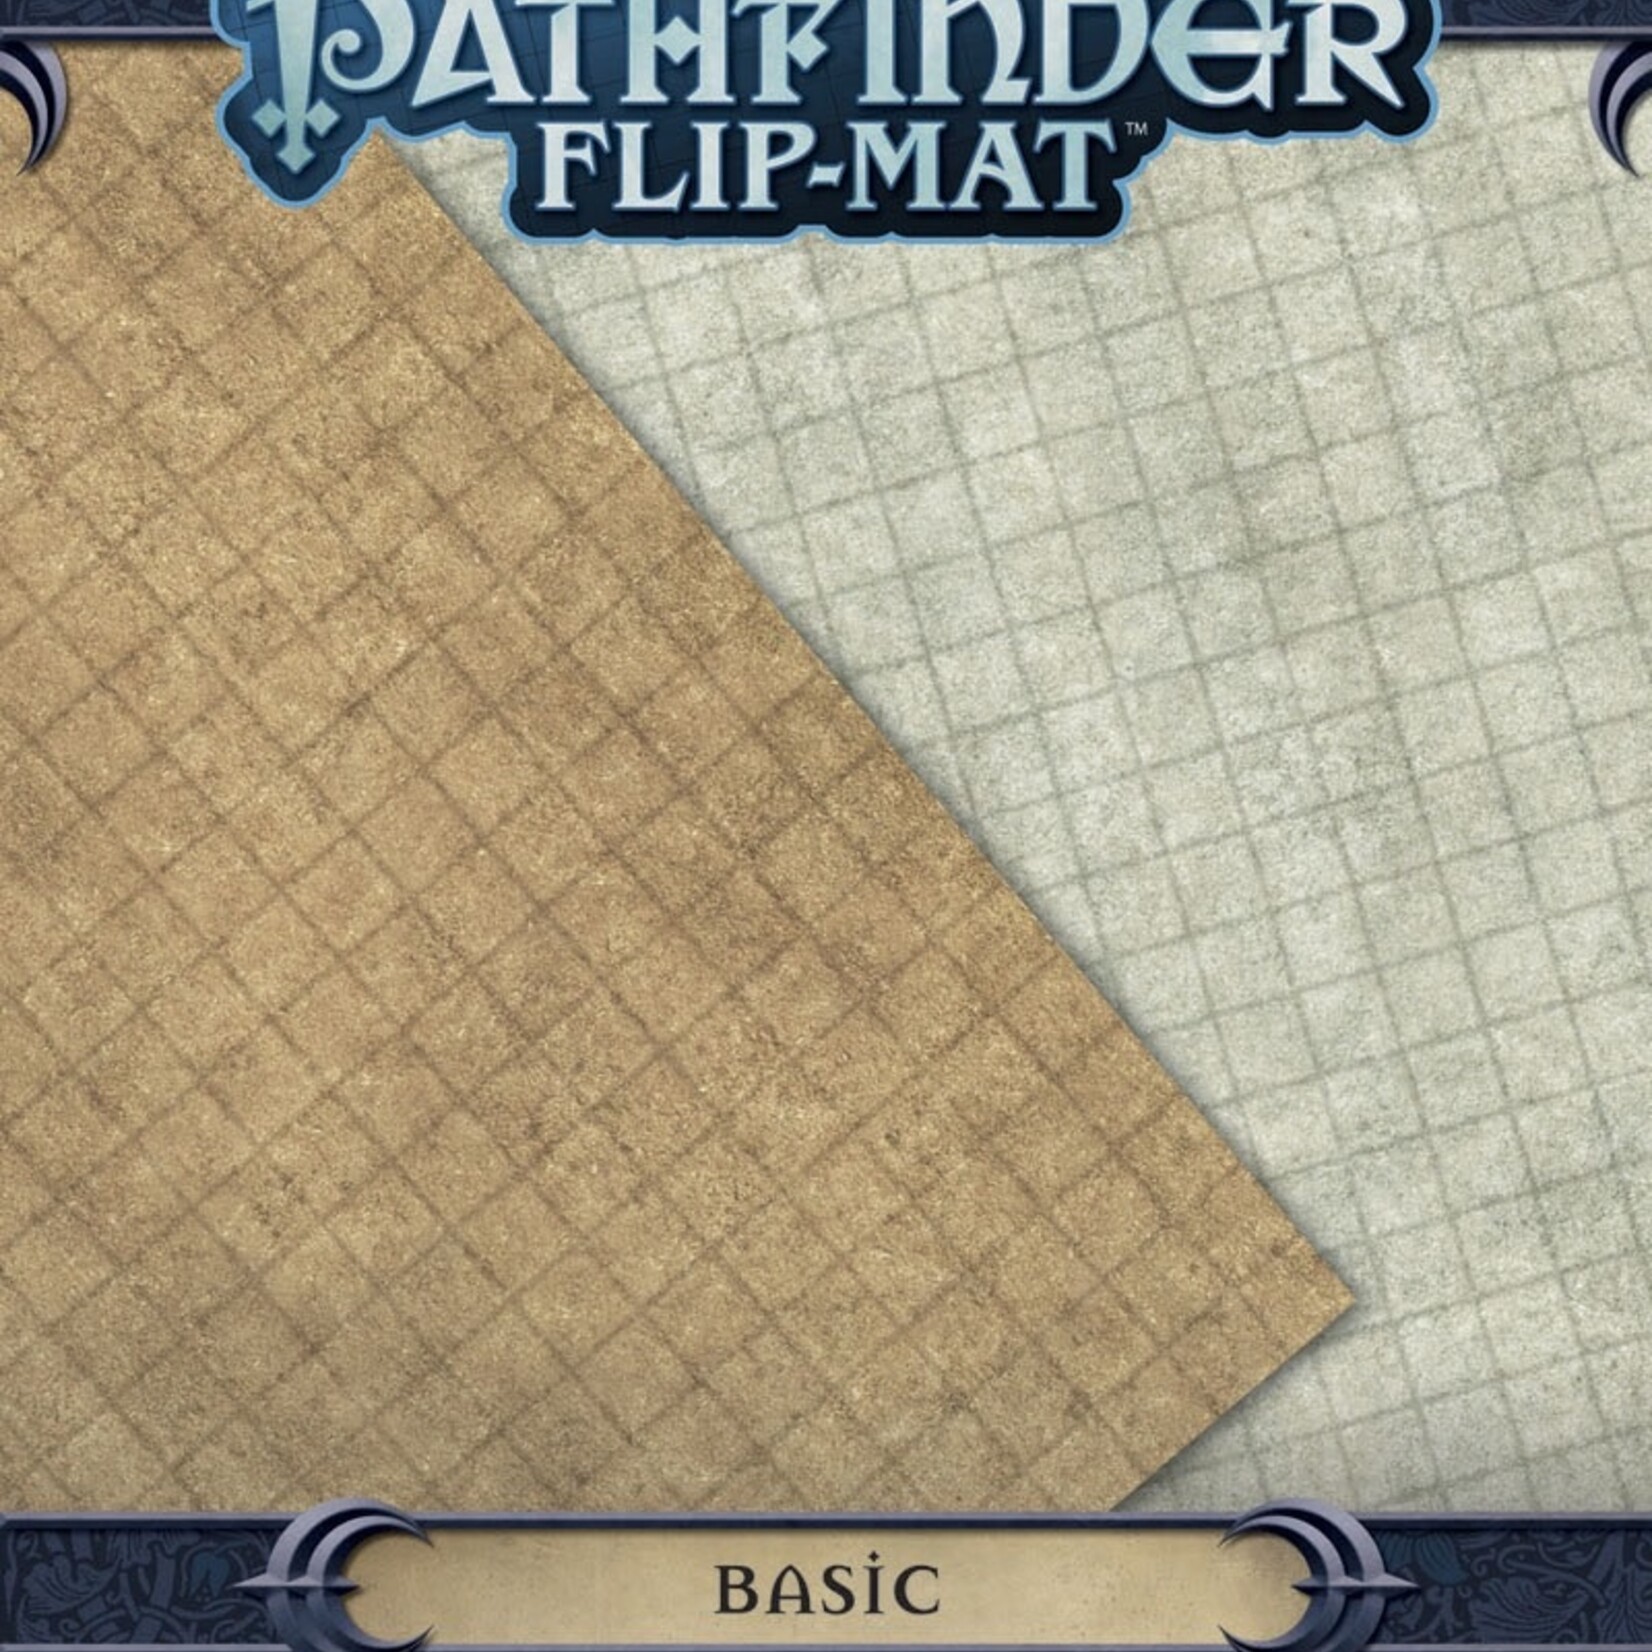 Paizo Pathfinder RPG: Flip-Mat - Basic (Revised Edition)